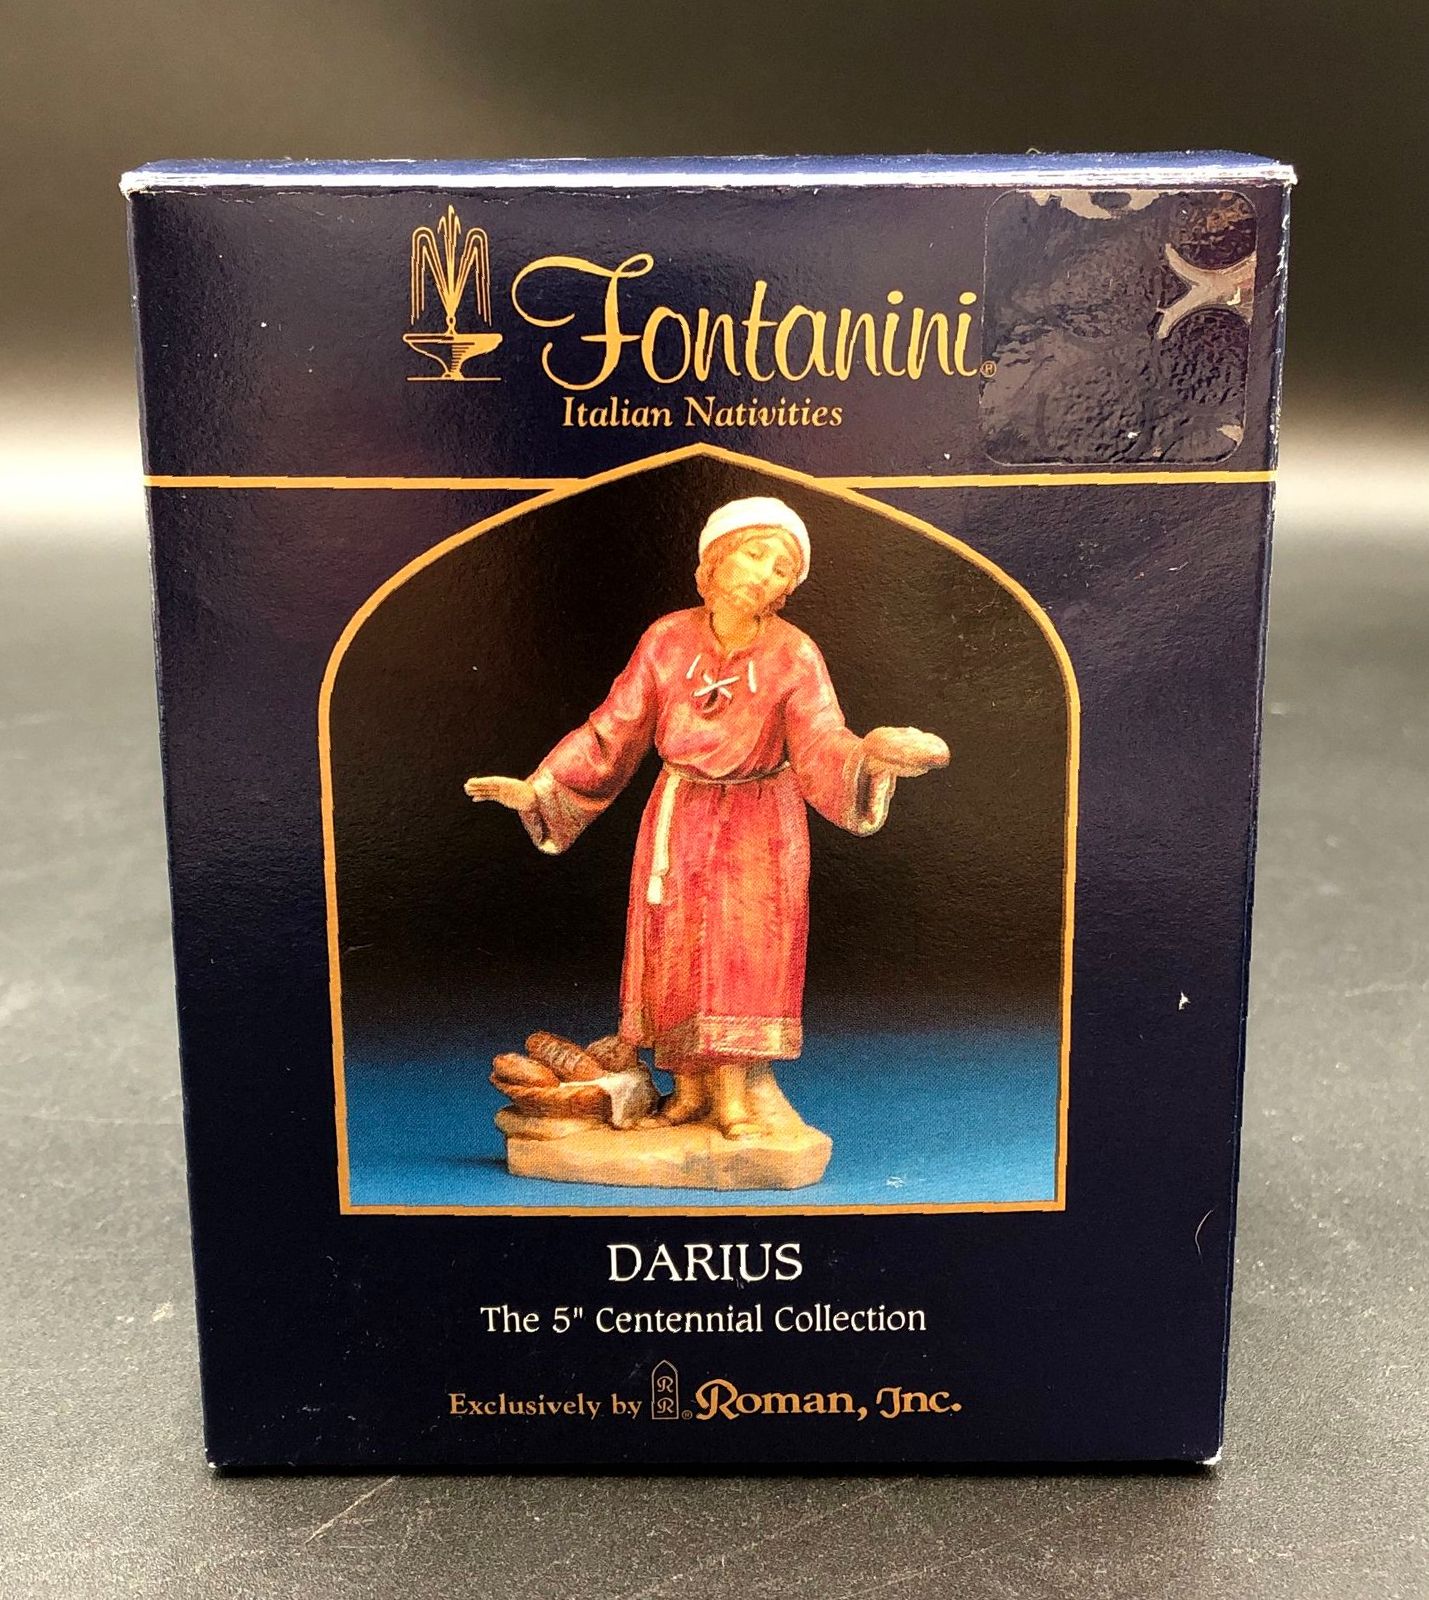 "Darius" 5" Fontanini Roman Inc. Italy Nativity Village Figurine